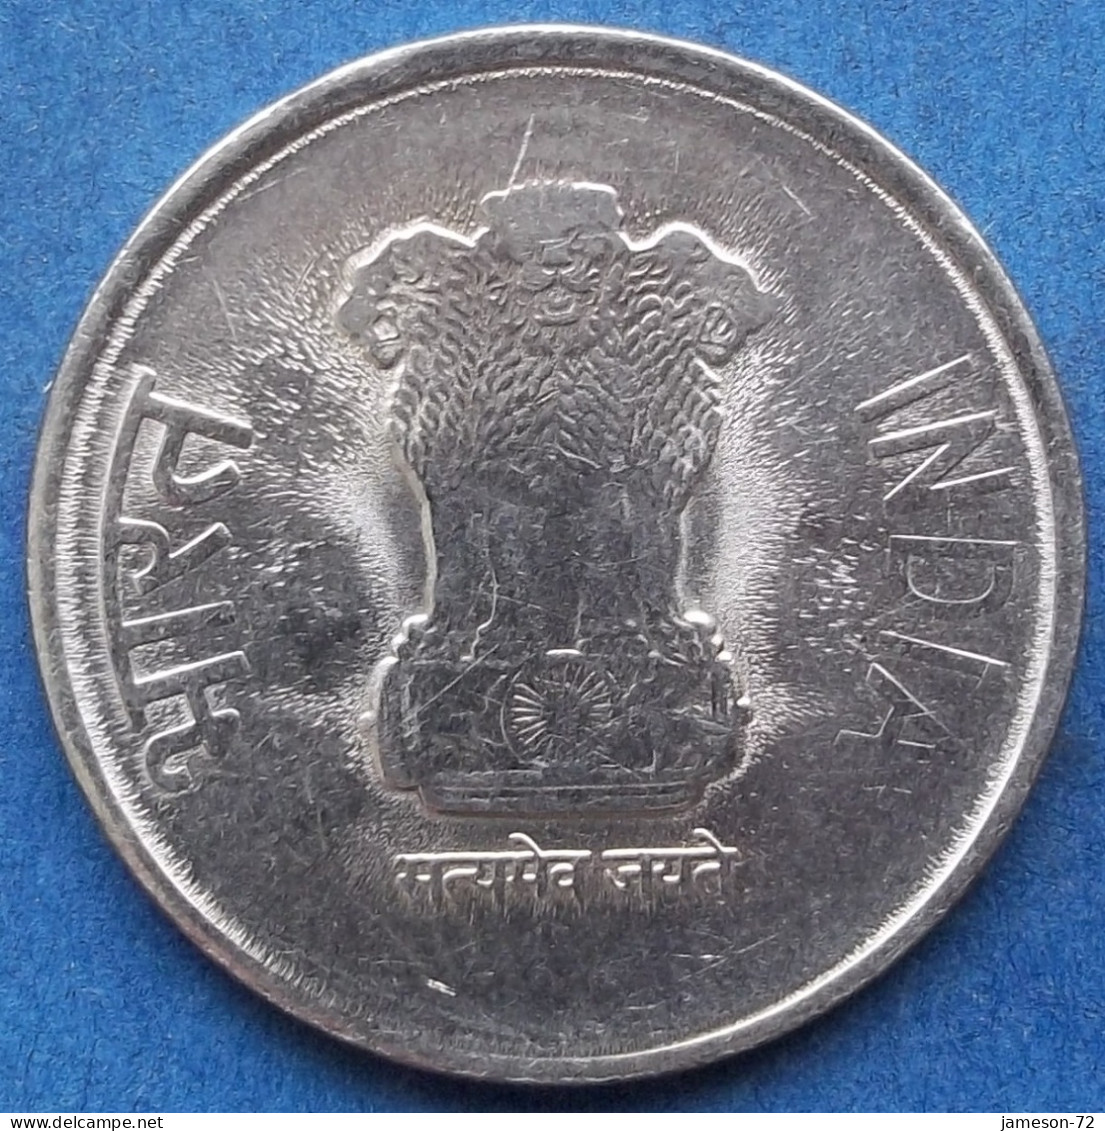 INDIA - 2 Rupees 2018 "Lotus Flowers" KM# 395 Republic Decimal Coinage (1957) - Edelweiss Coins - Géorgie